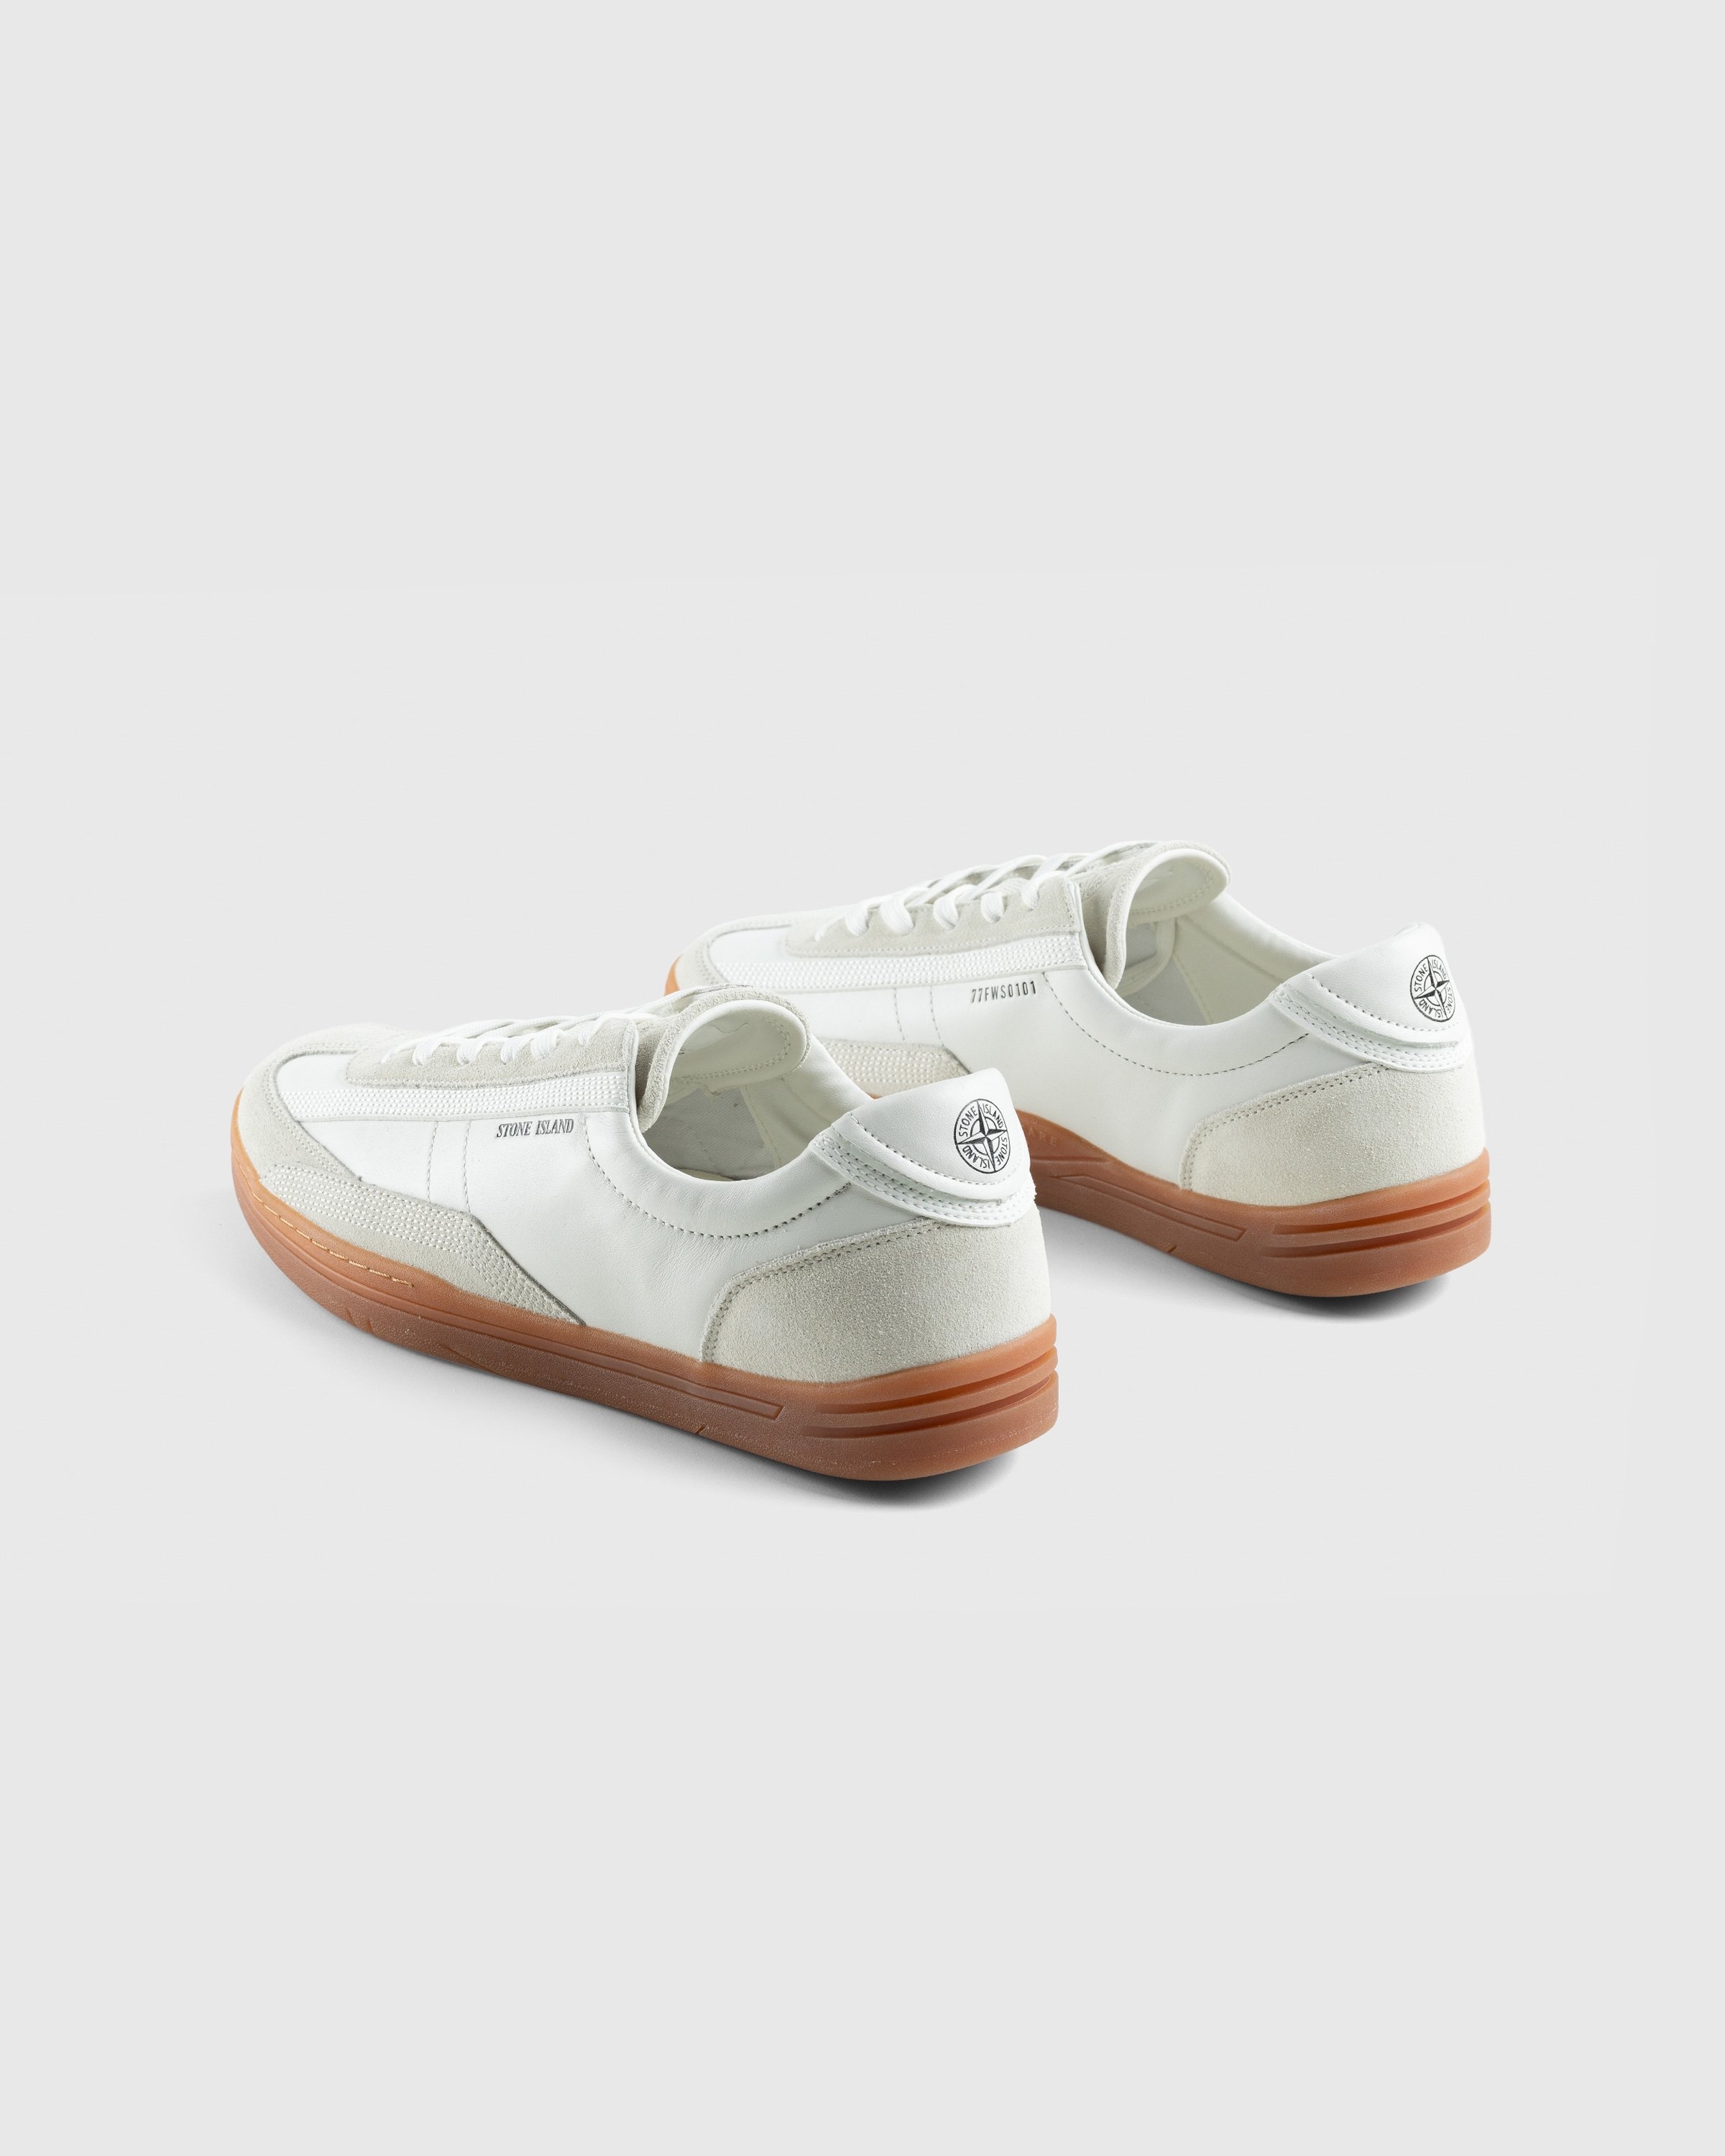 Stone Island – Rock Sneaker White - Low Top Sneakers - White - Image 4